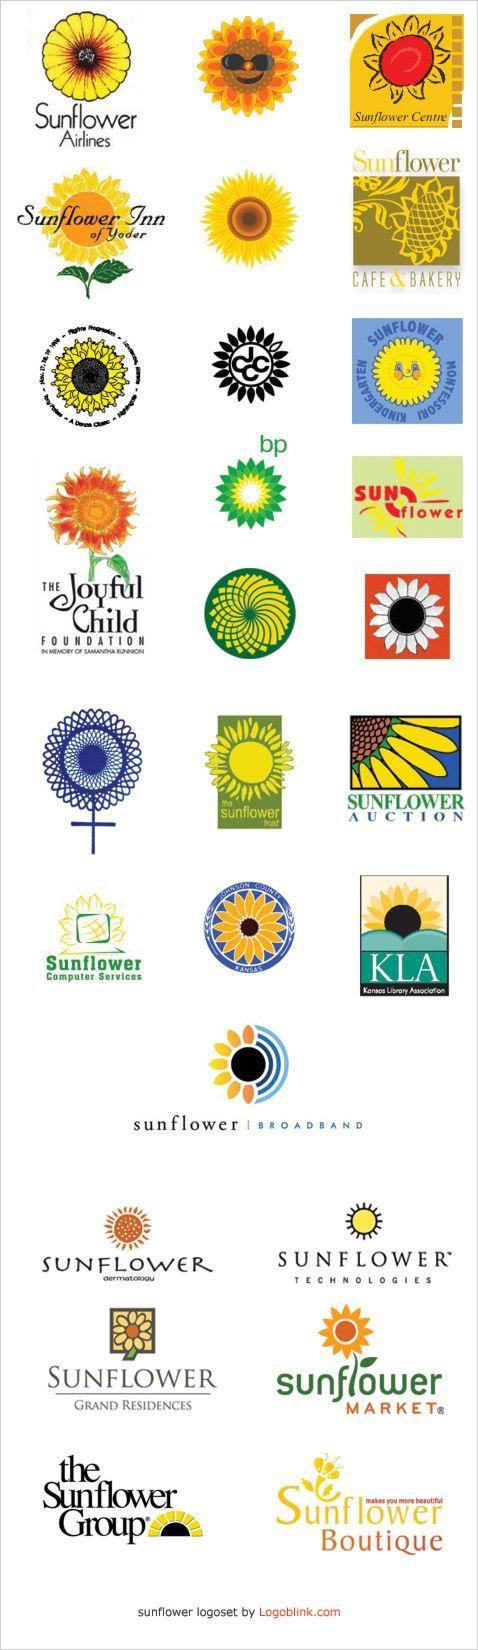 Sunflower Logo - Sunflower logo set + inspiration set - Logoblink.com